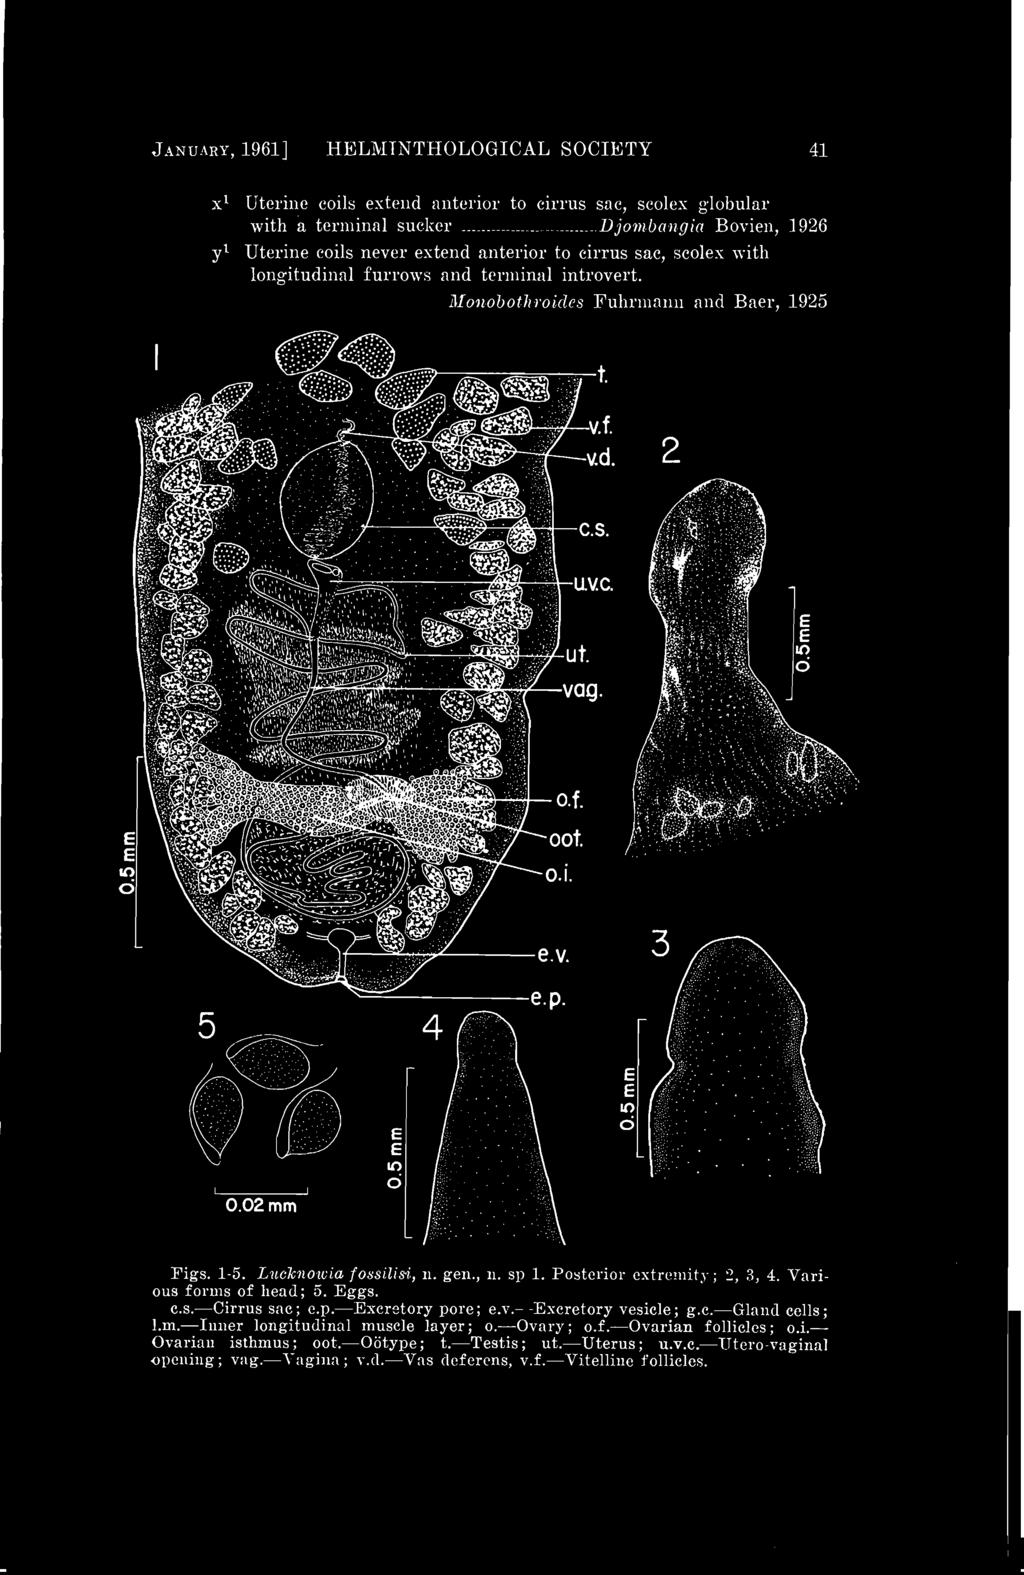 Posterior extremity; 2, 3, 4. Various forms of head; 5. Eggs. c.s. Cirrus sac; e.p. Excretory pore; e.v. Excretory vesicle; g.c. Gland cells; l.m. Inner longitudinal muscle layer; o.